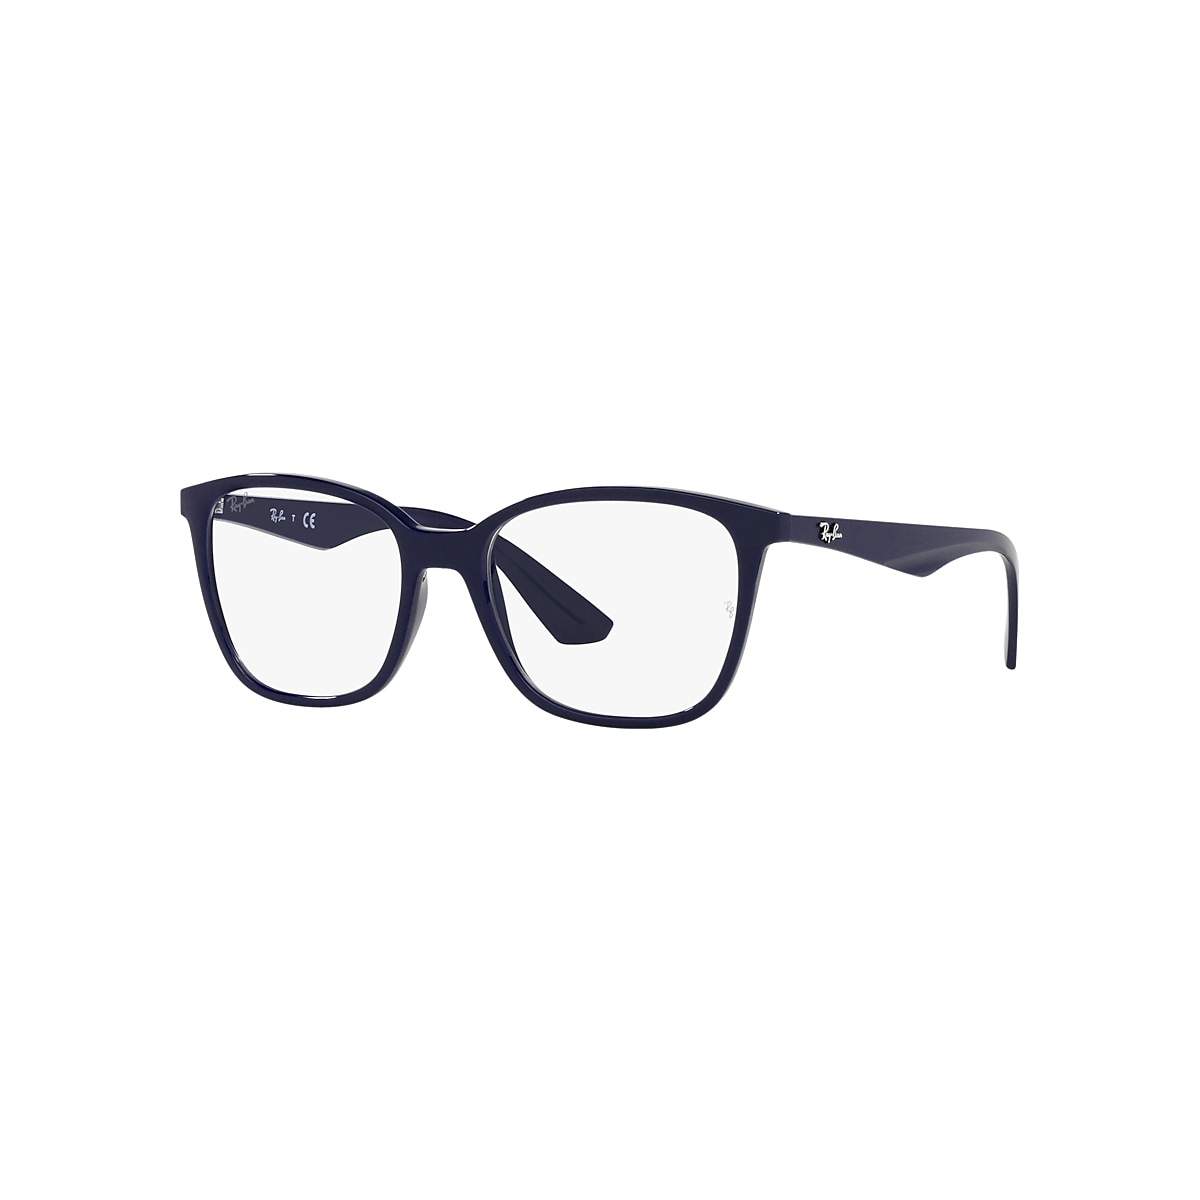 RB7066 OPTICS Eyeglasses with Blue Frame - RB7066 | Ray-Ban 